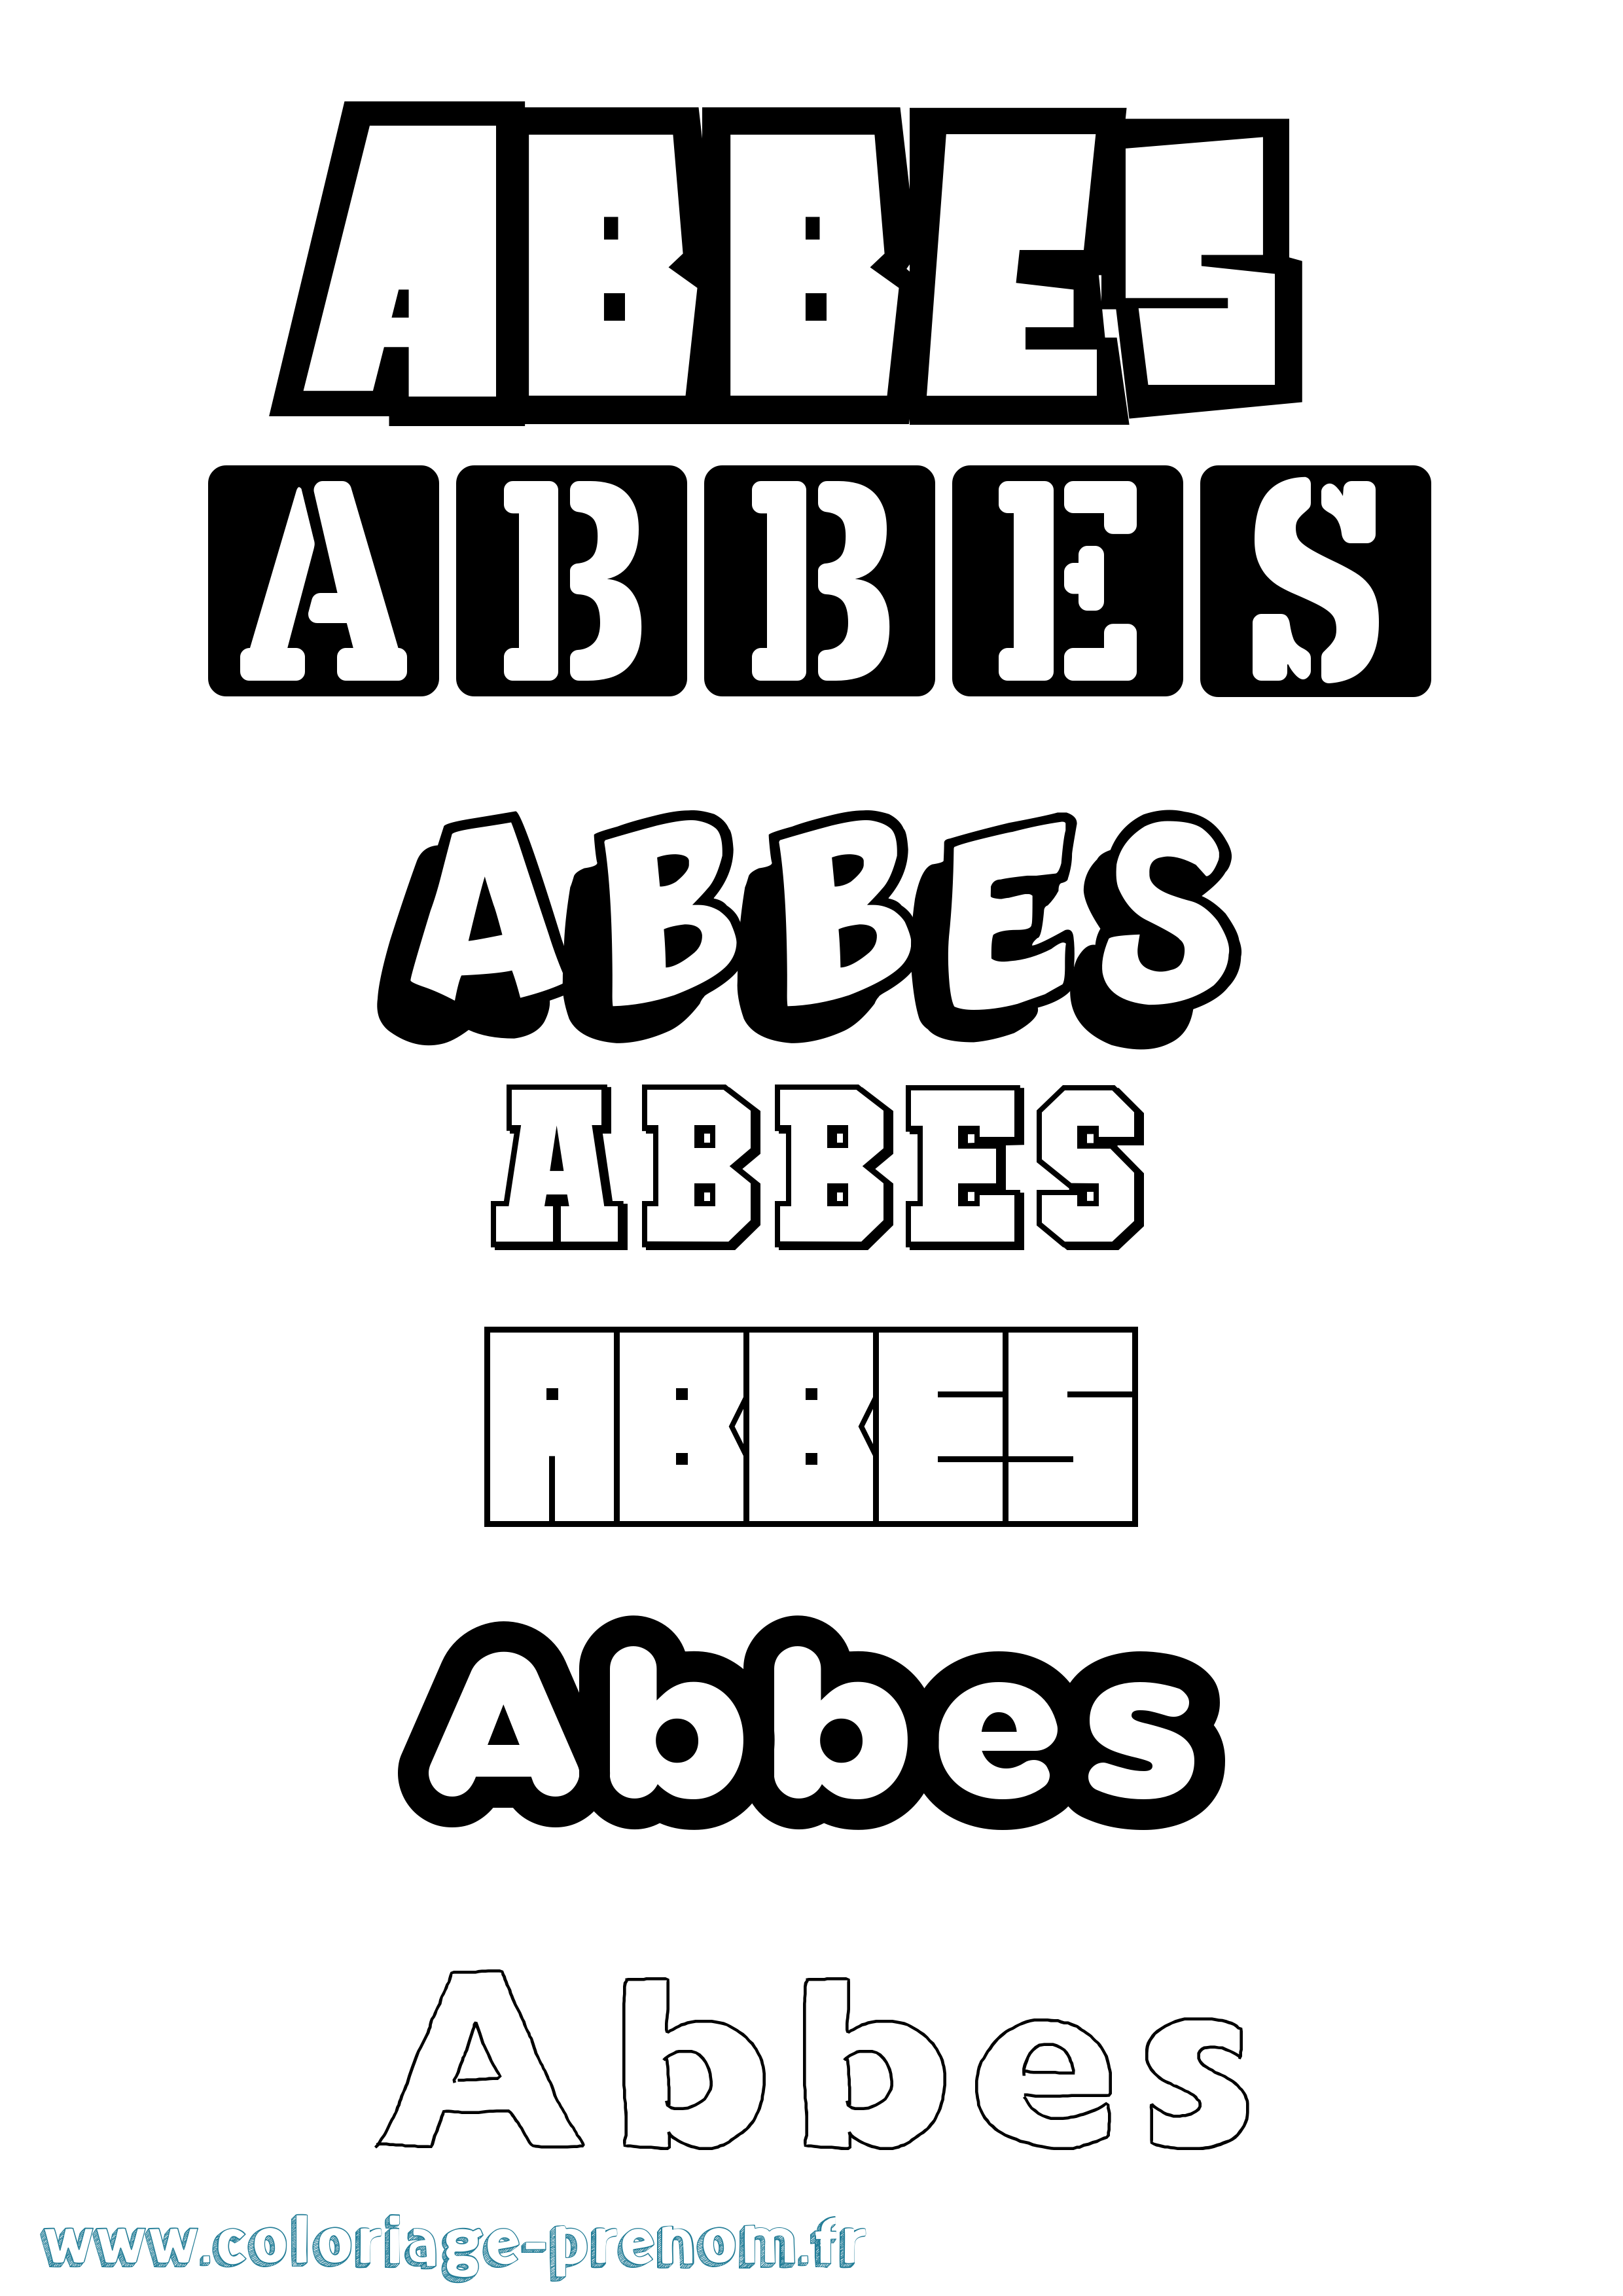 Coloriage prénom Abbes Simple